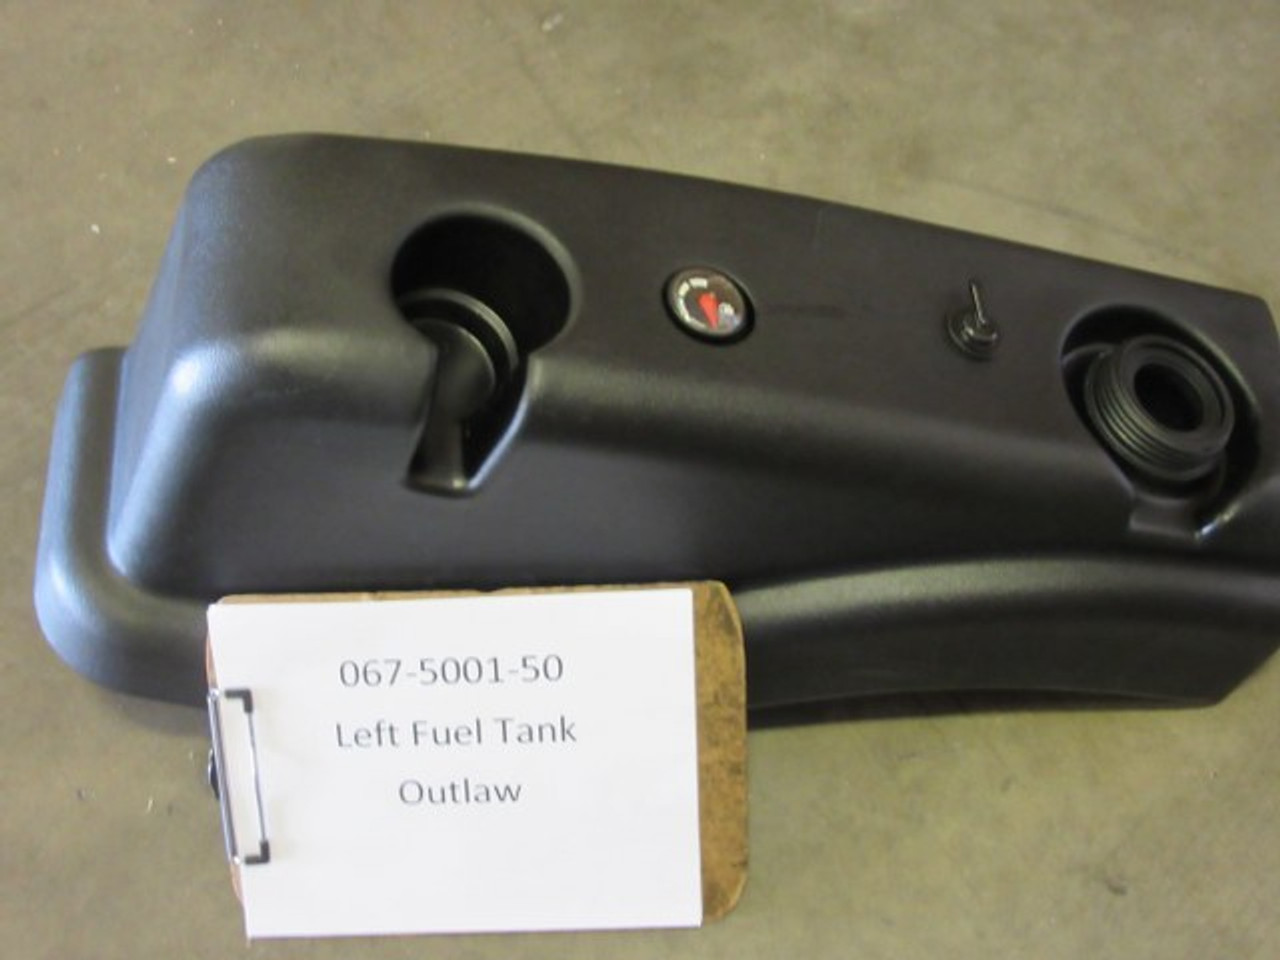 Bad Boy Mower OEM  067-5001-50 Left Fuel Tank/Outlaw/2012/EPA